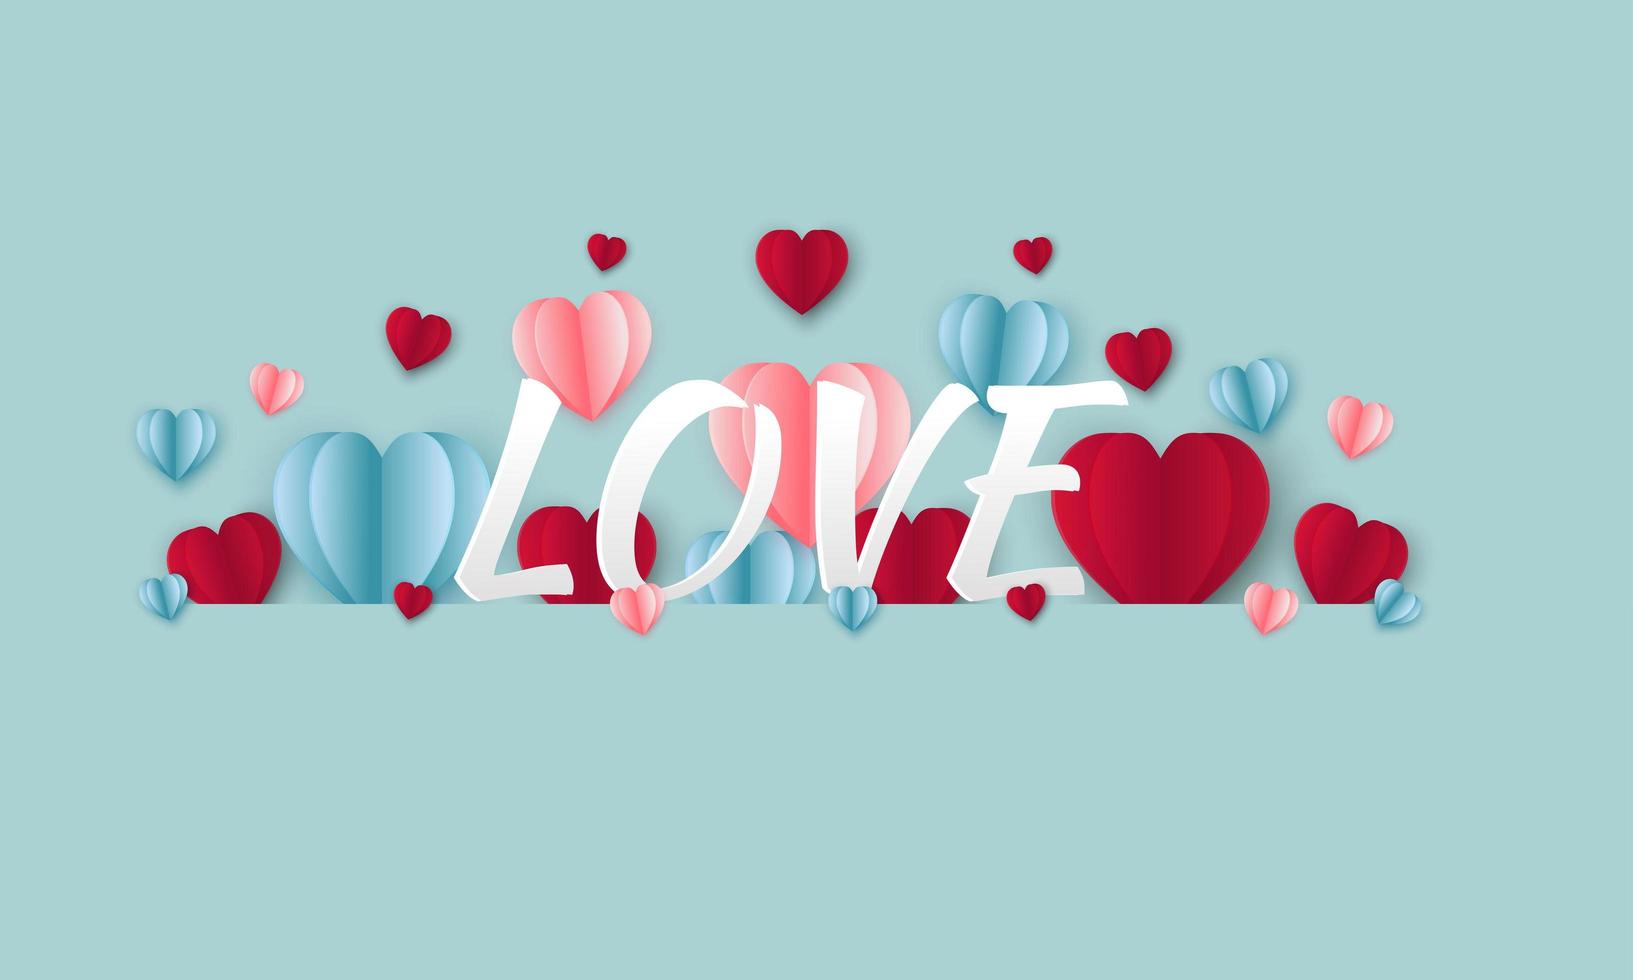 Fondo de venta de día de San Valentín con patrón de corazón. papel tapiz, volantes, invitación, carteles, folletos, pancartas, ilustración vectorial. vector